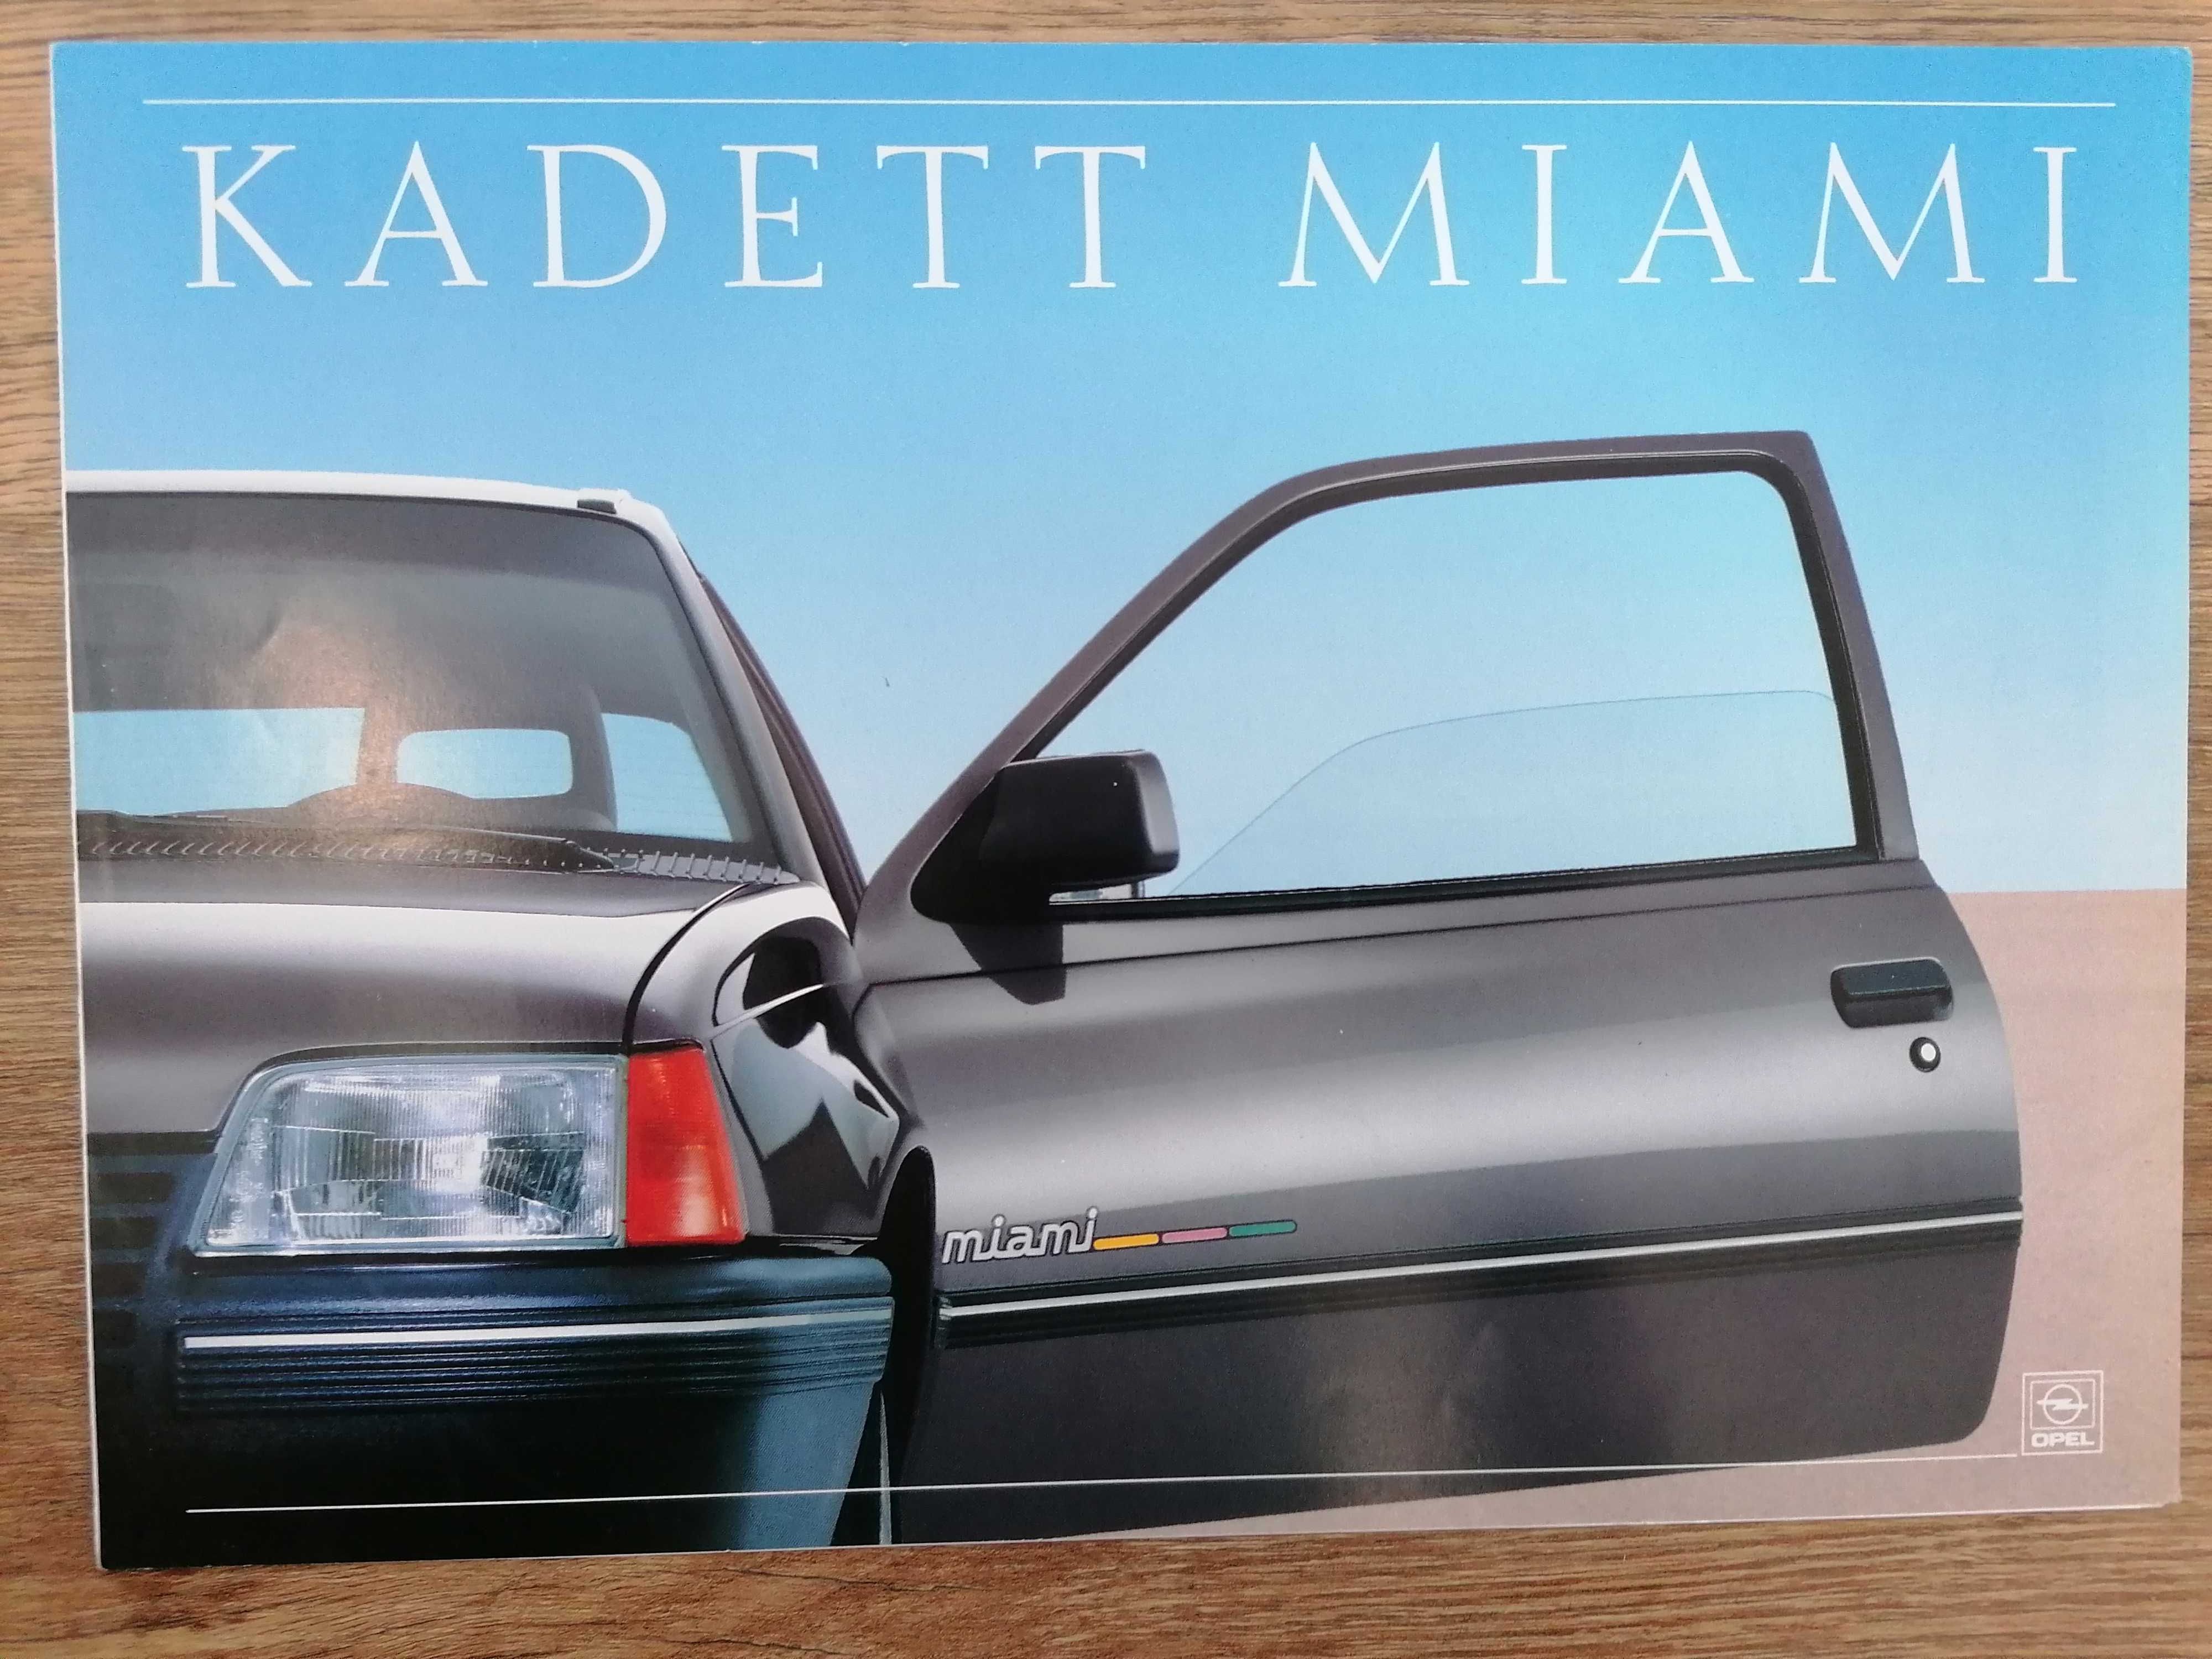 Prospekt Opel Kadett Miami